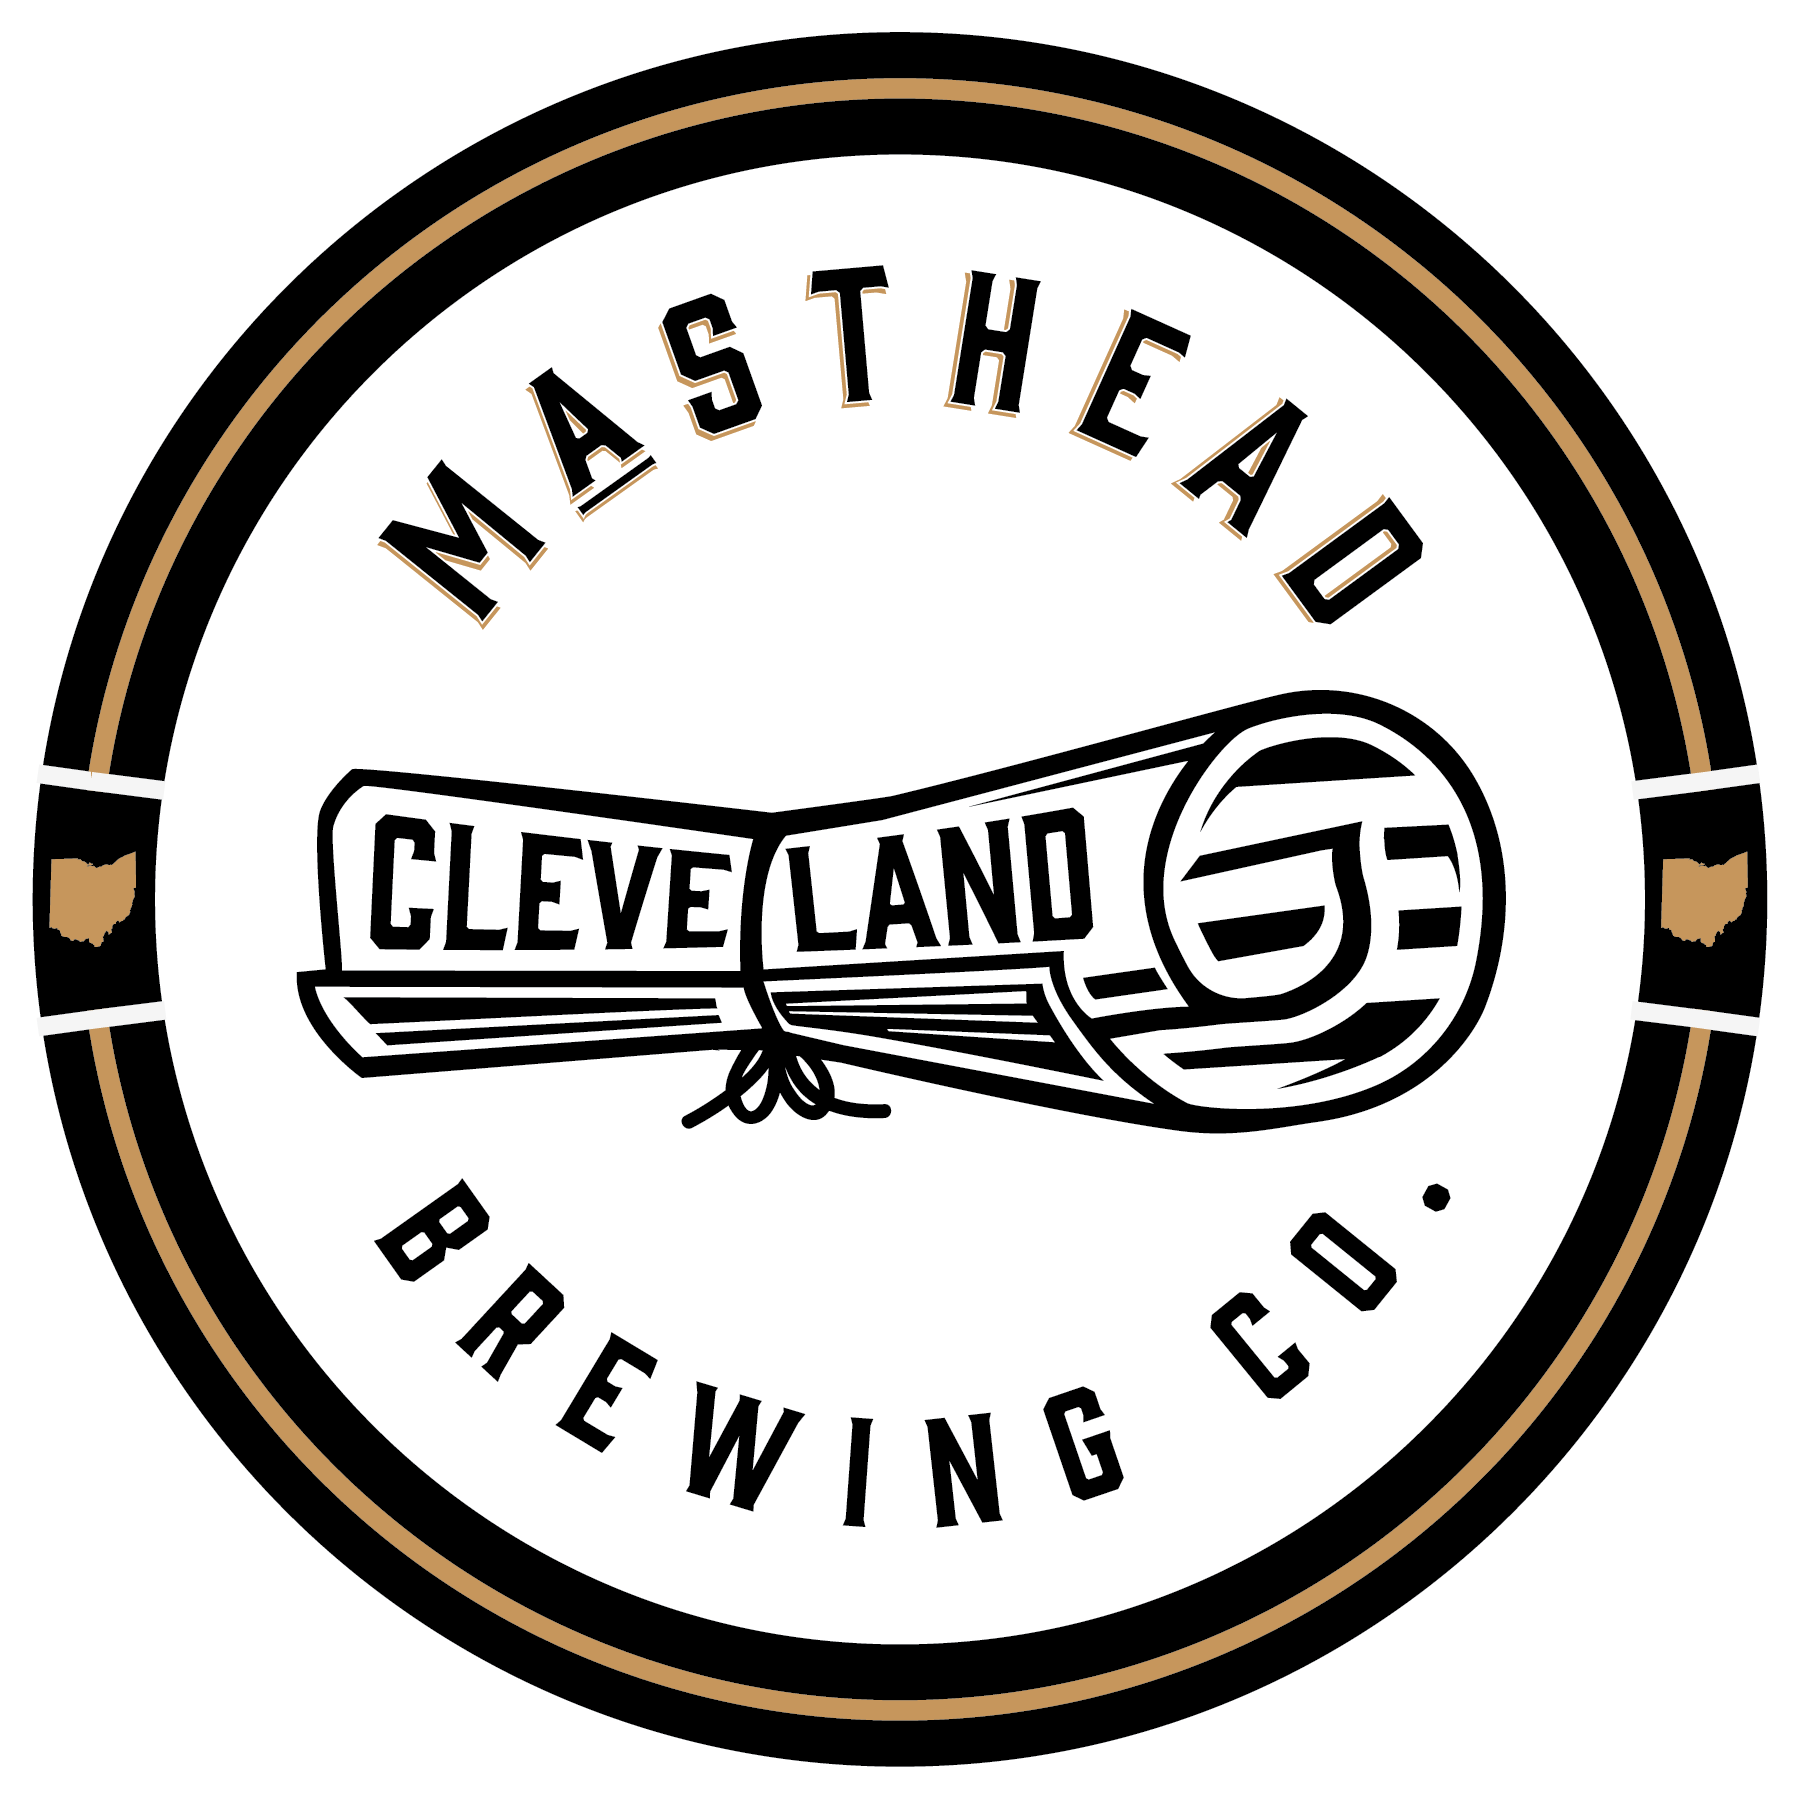 Masthead Brewing Co